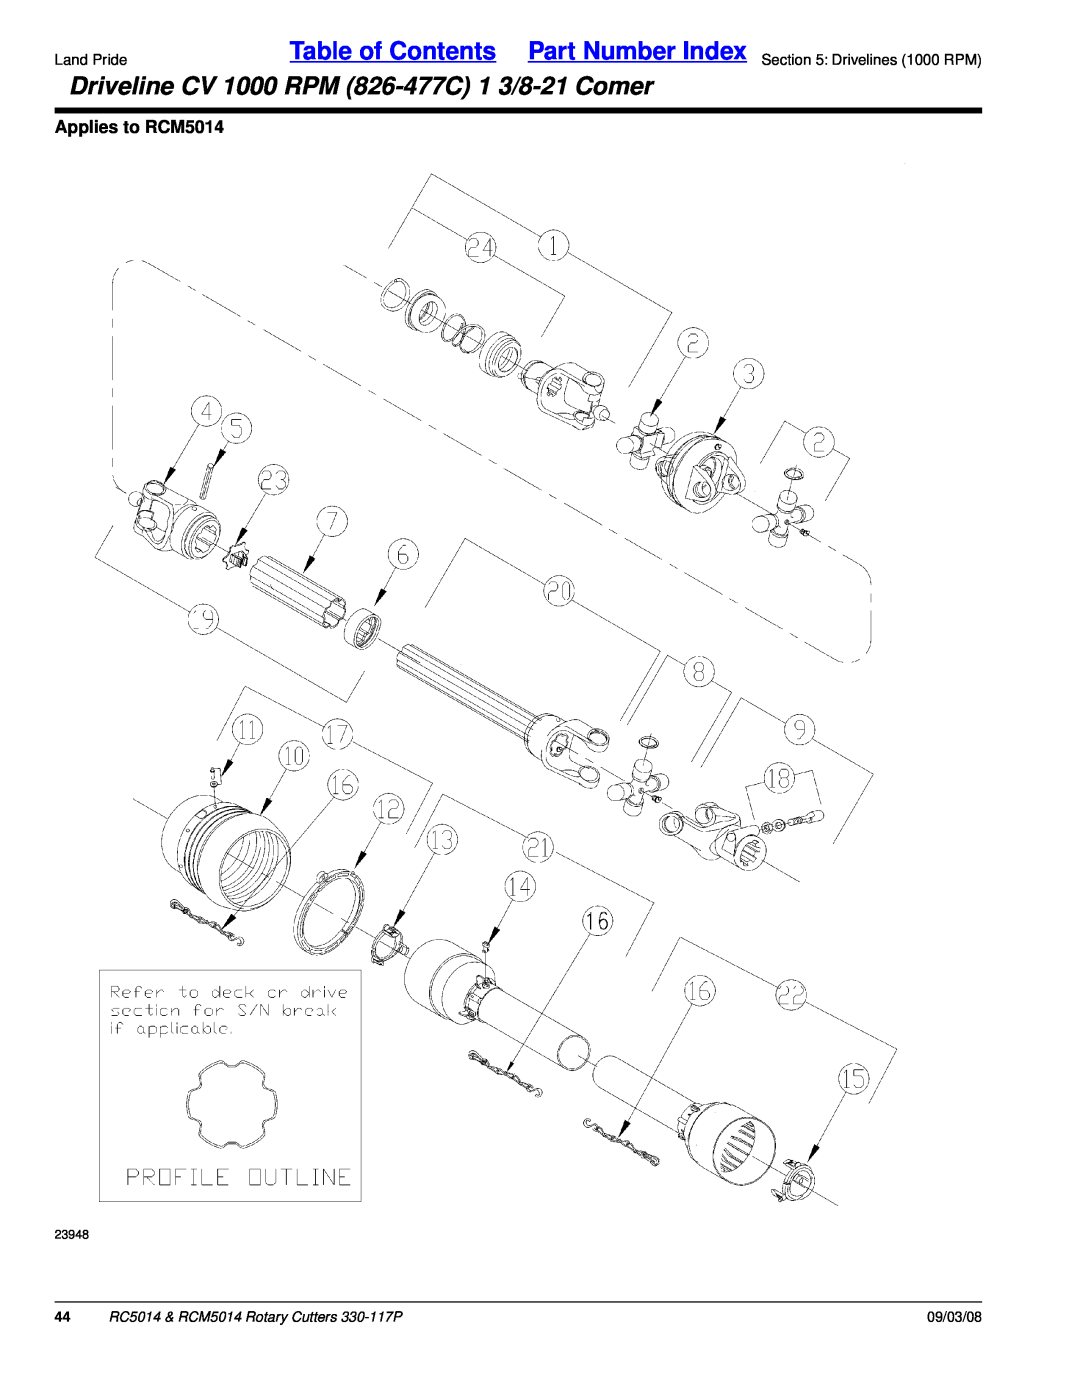 Land Pride RC5014 manual Driveline CV 1000 RPM 826-477C1 3/8-21Comer, Applies to RCM5014, 09/03/08 